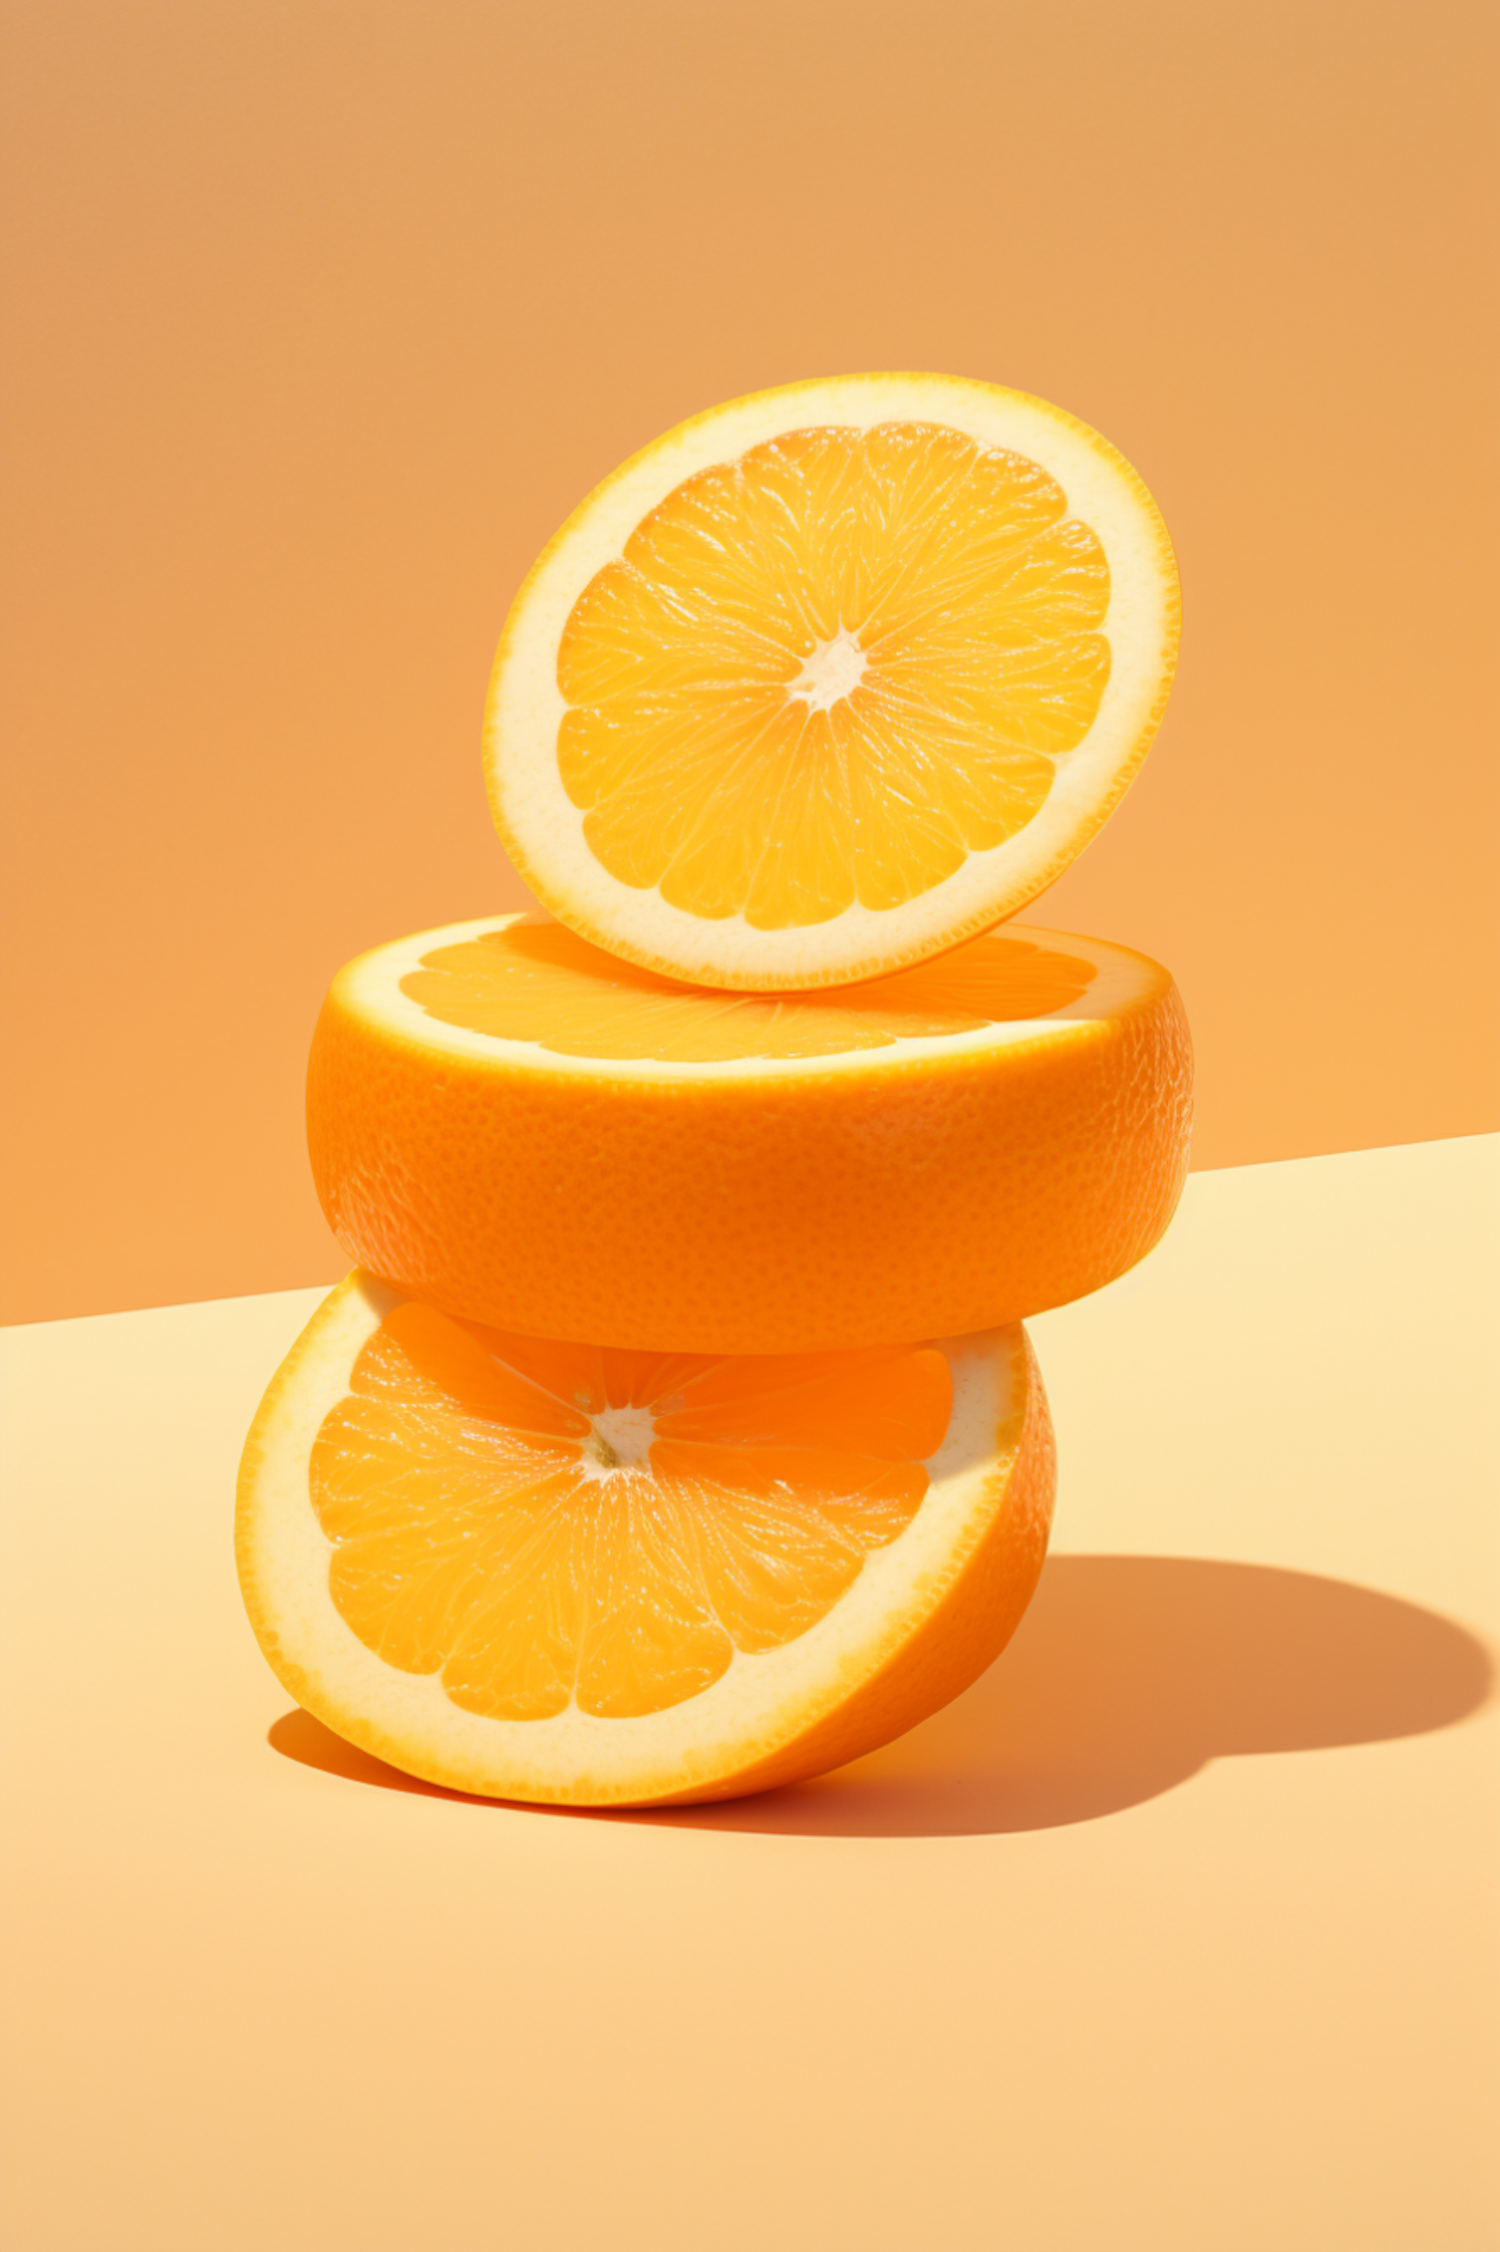 Symmetrical Citrus Stack with Monochrome Backdrop